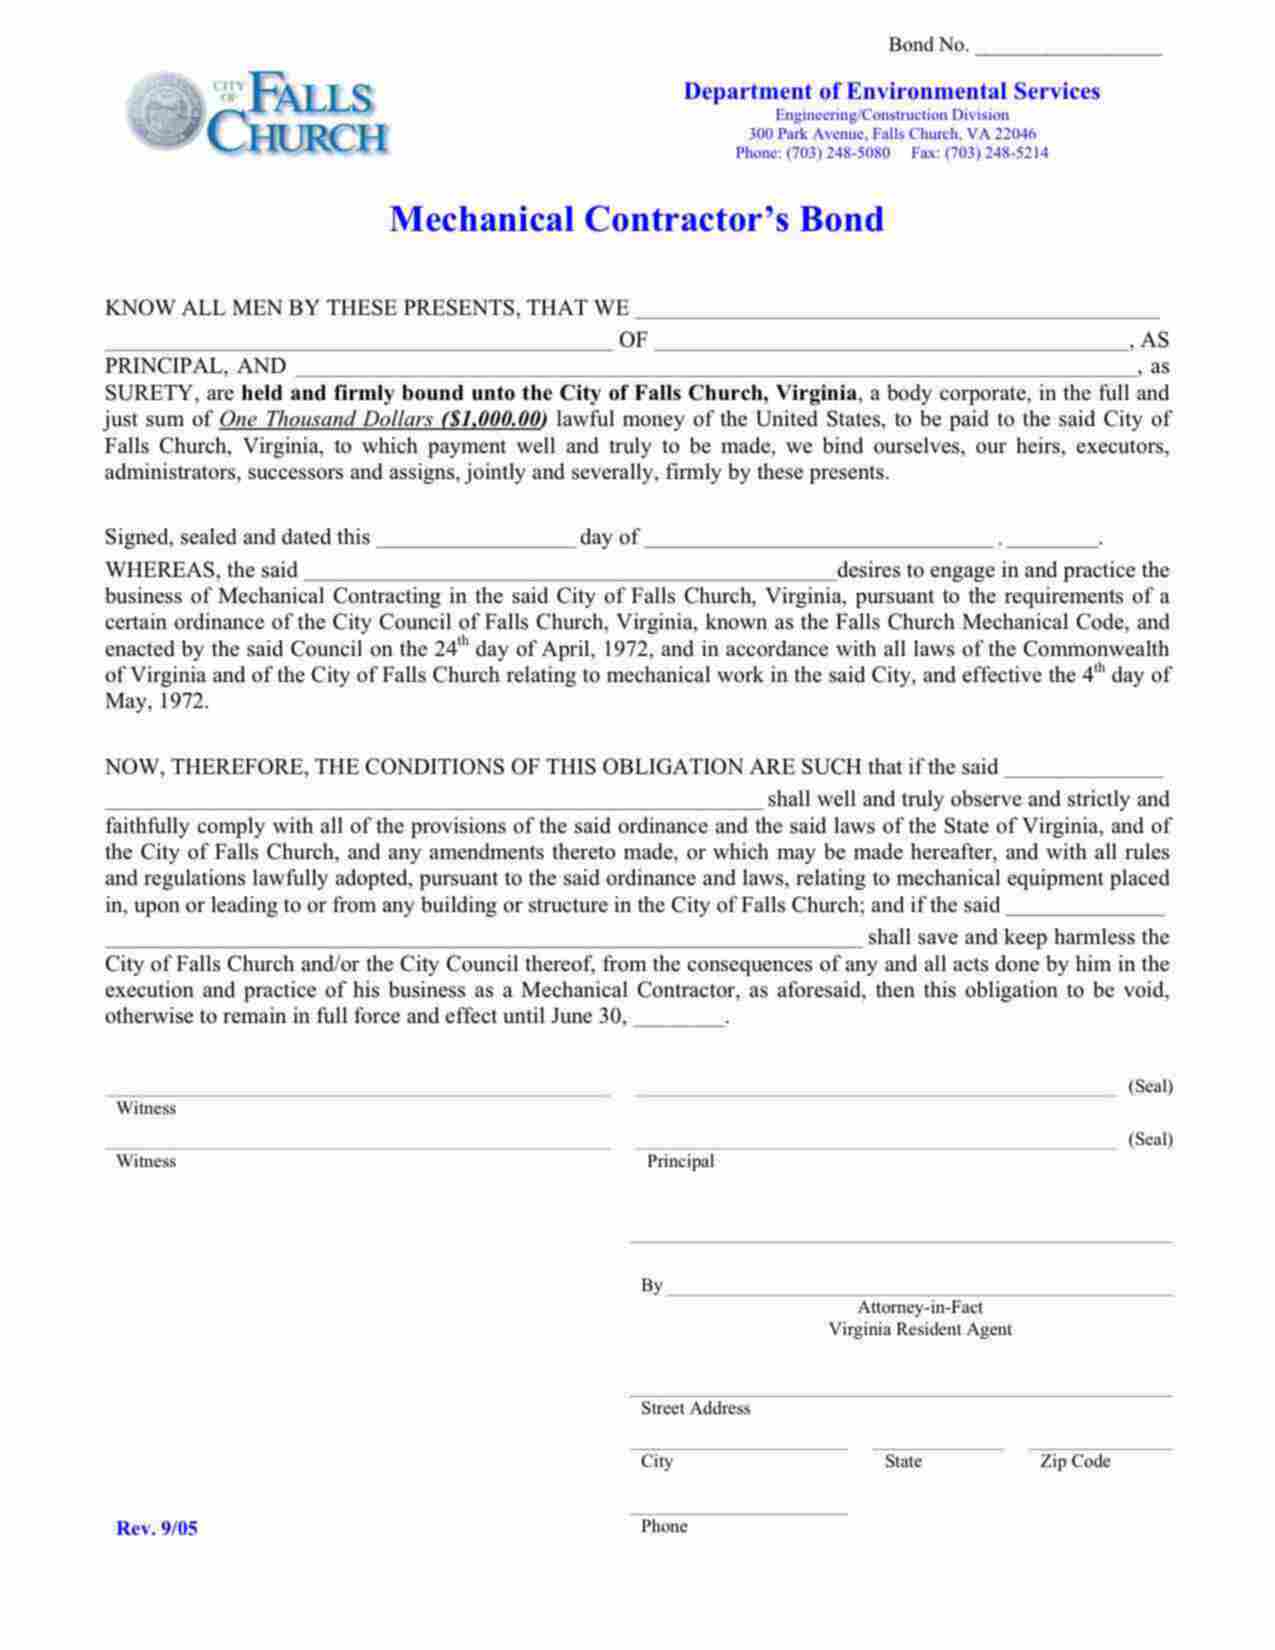 Virginia Mechanical Contractor Bond Form